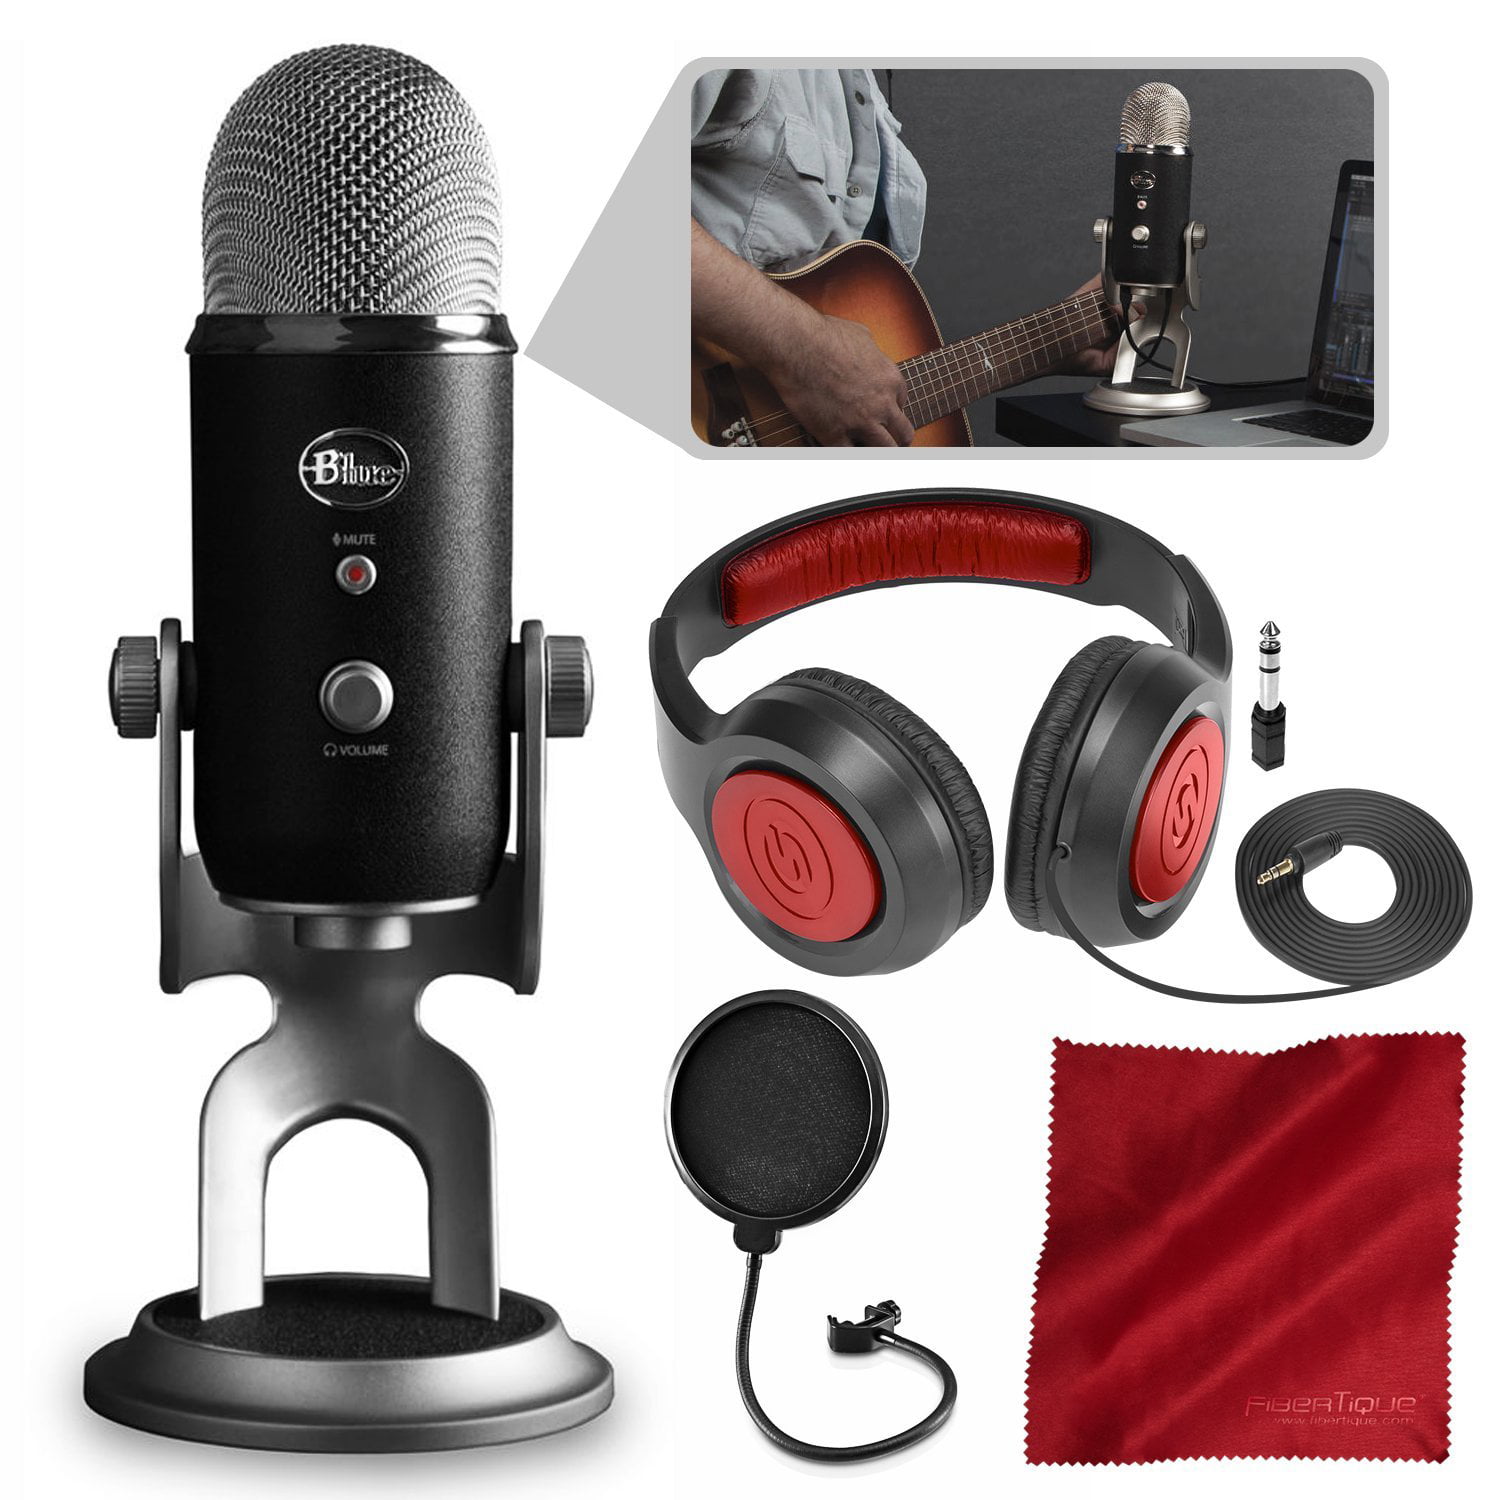 Blue Yeti Pro Studio All In One Pro Studio Vocal System W Recording Software And Samson Closed Back Headphones Accessory Bundle Walmart Com Walmart Com